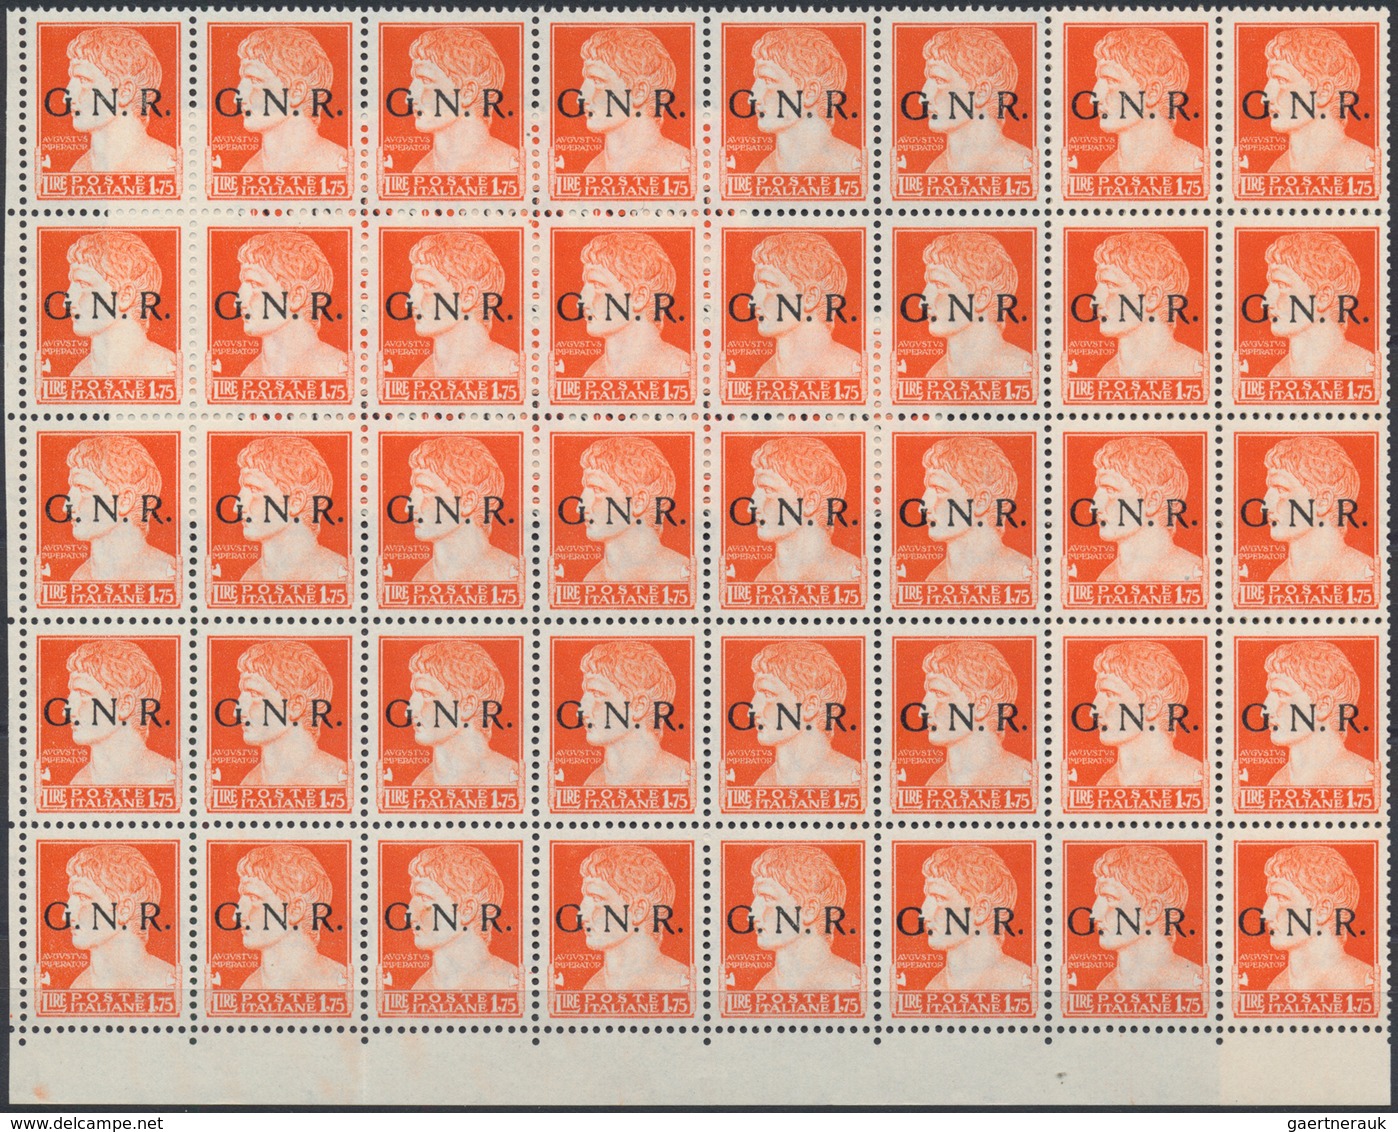 Italien: 1944, Republika Sociale "G.N.R." Issue 1,75 Lire Orange 336 Stamps Mint Never Hinged Large - Sammlungen